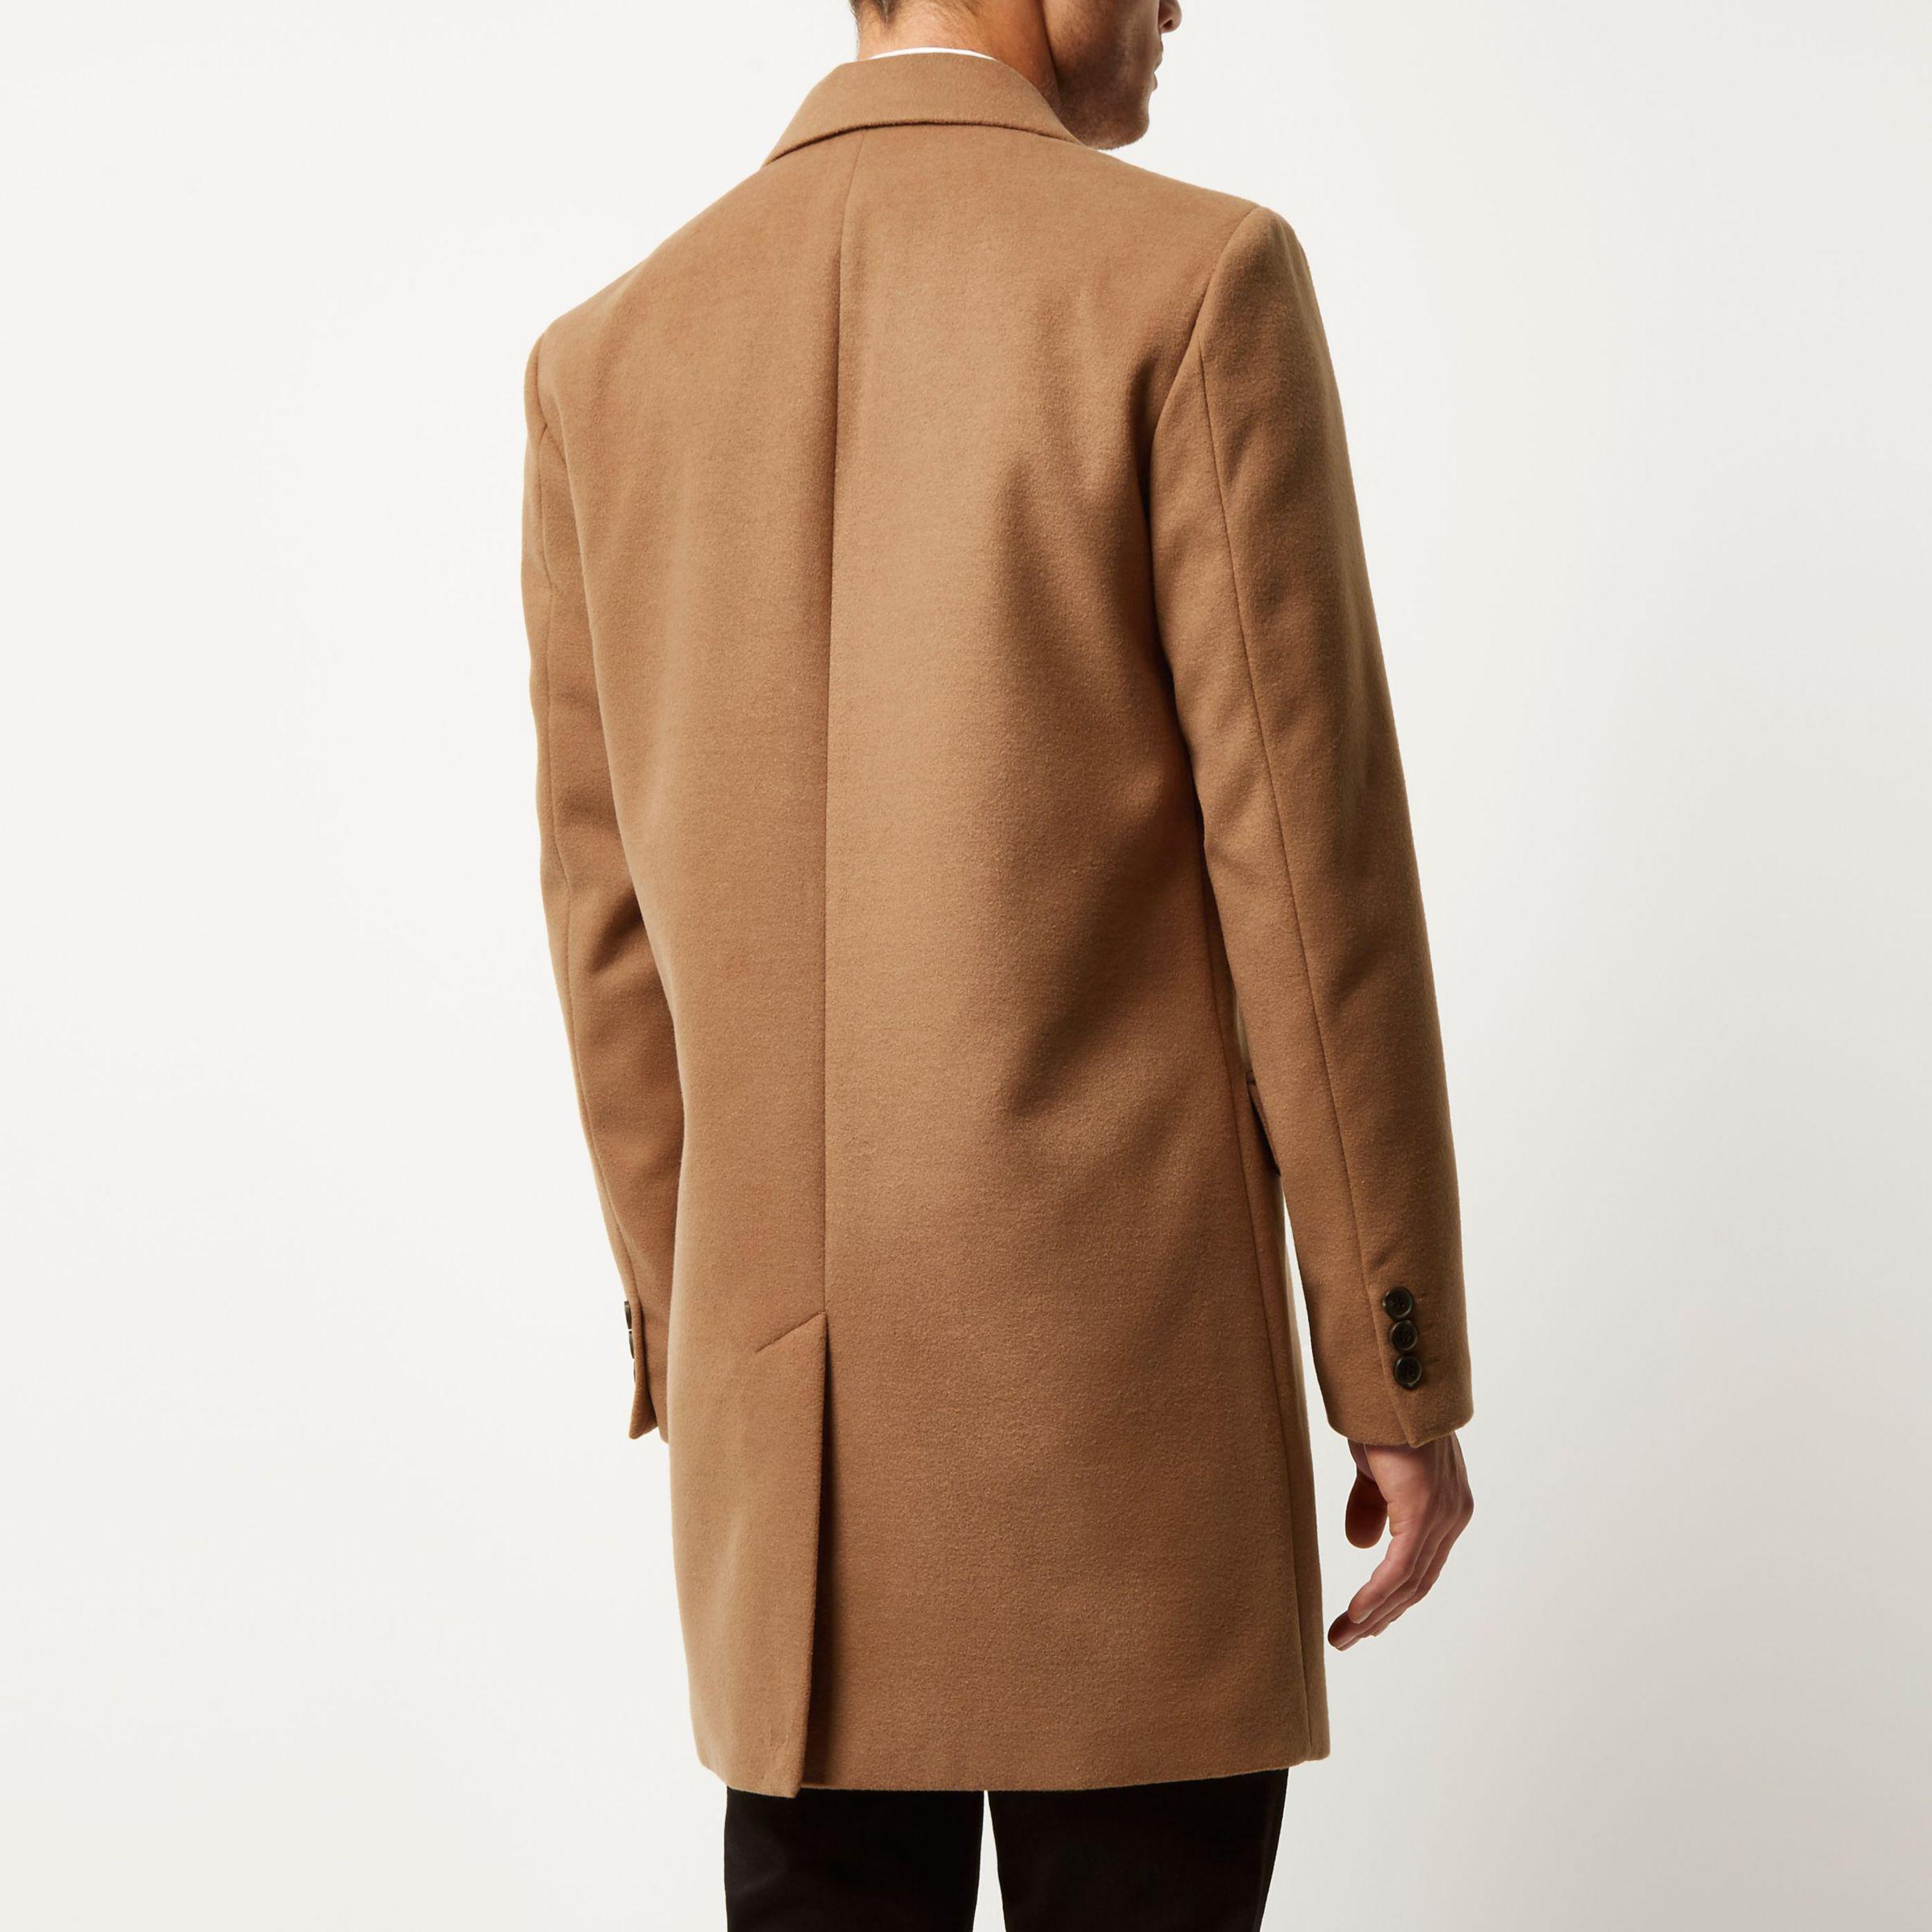 River Island Synthetic Tan Smart Overcoat in Brown for Men - Lyst